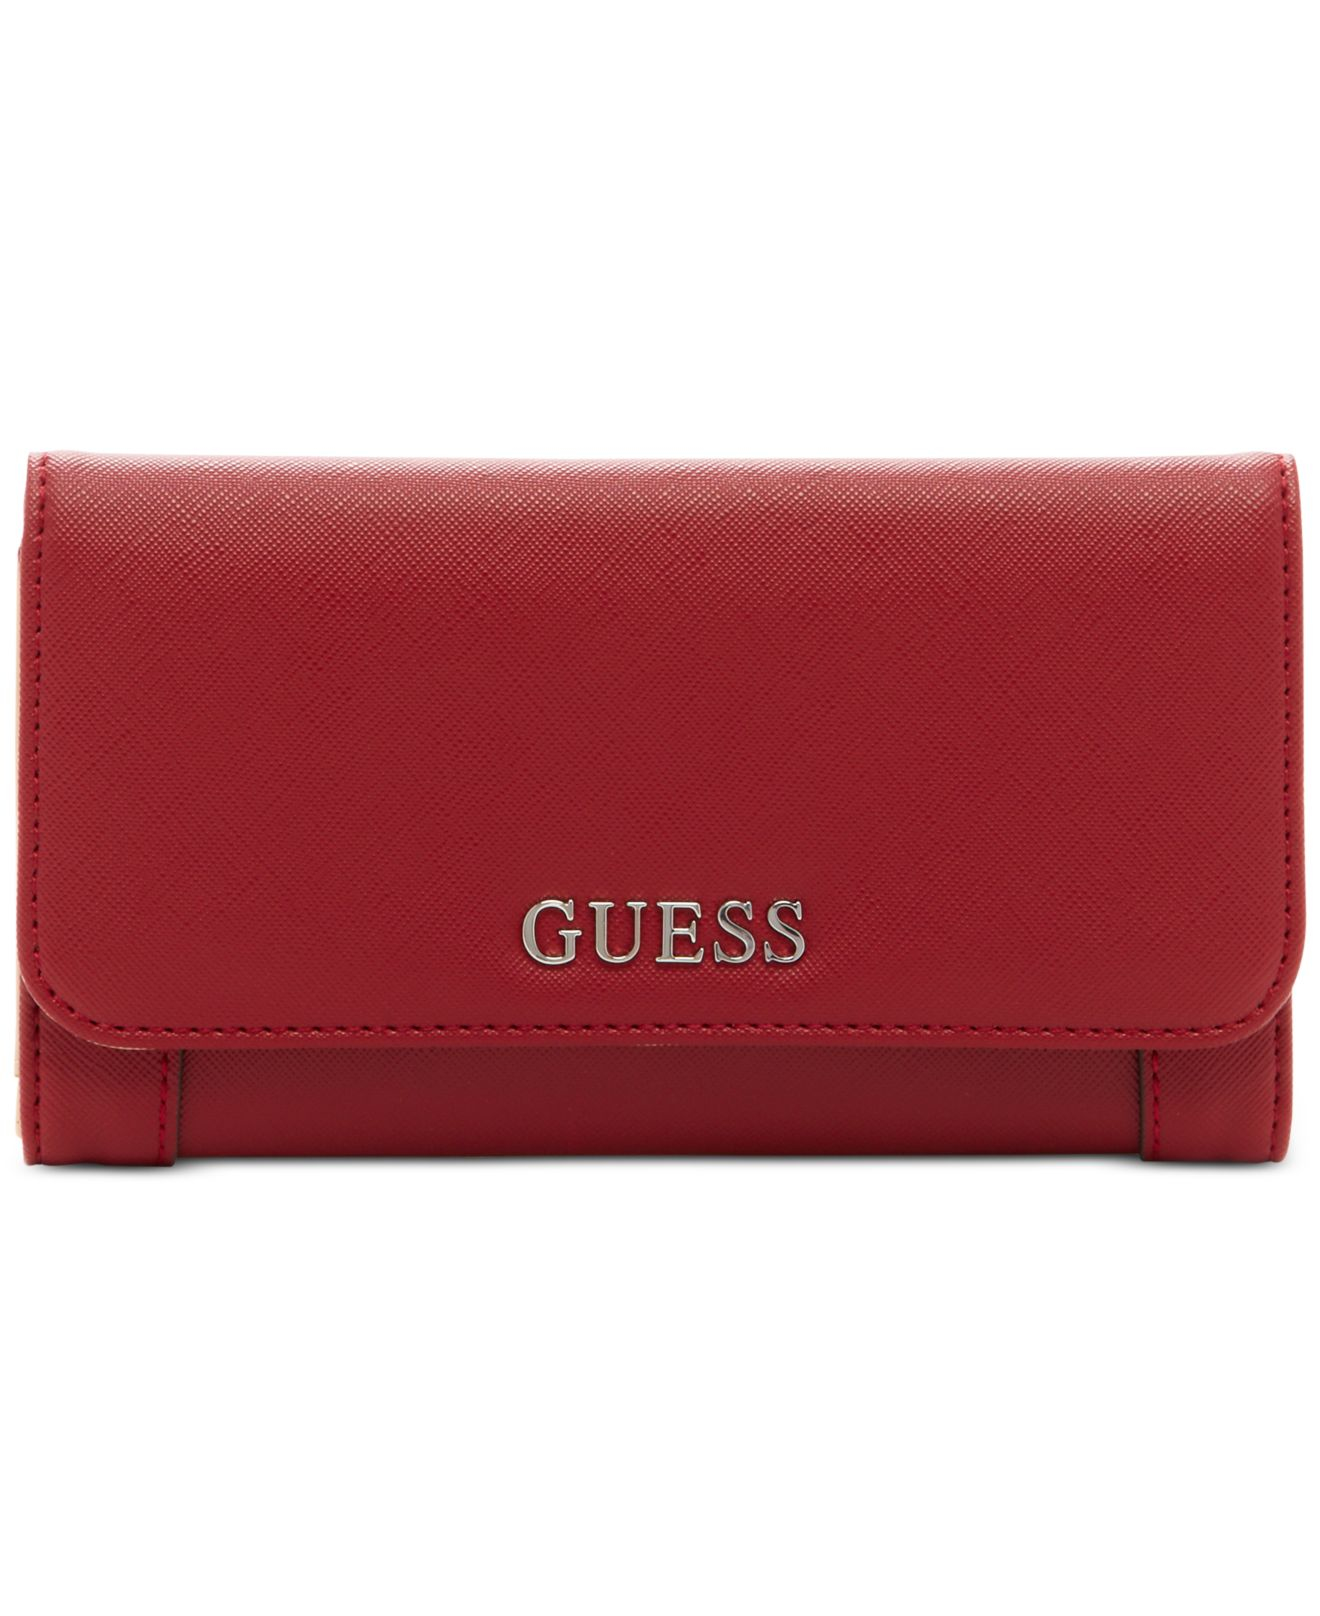 Guess Delaney Slim Clutch Wallet in Red (Claret) | Lyst